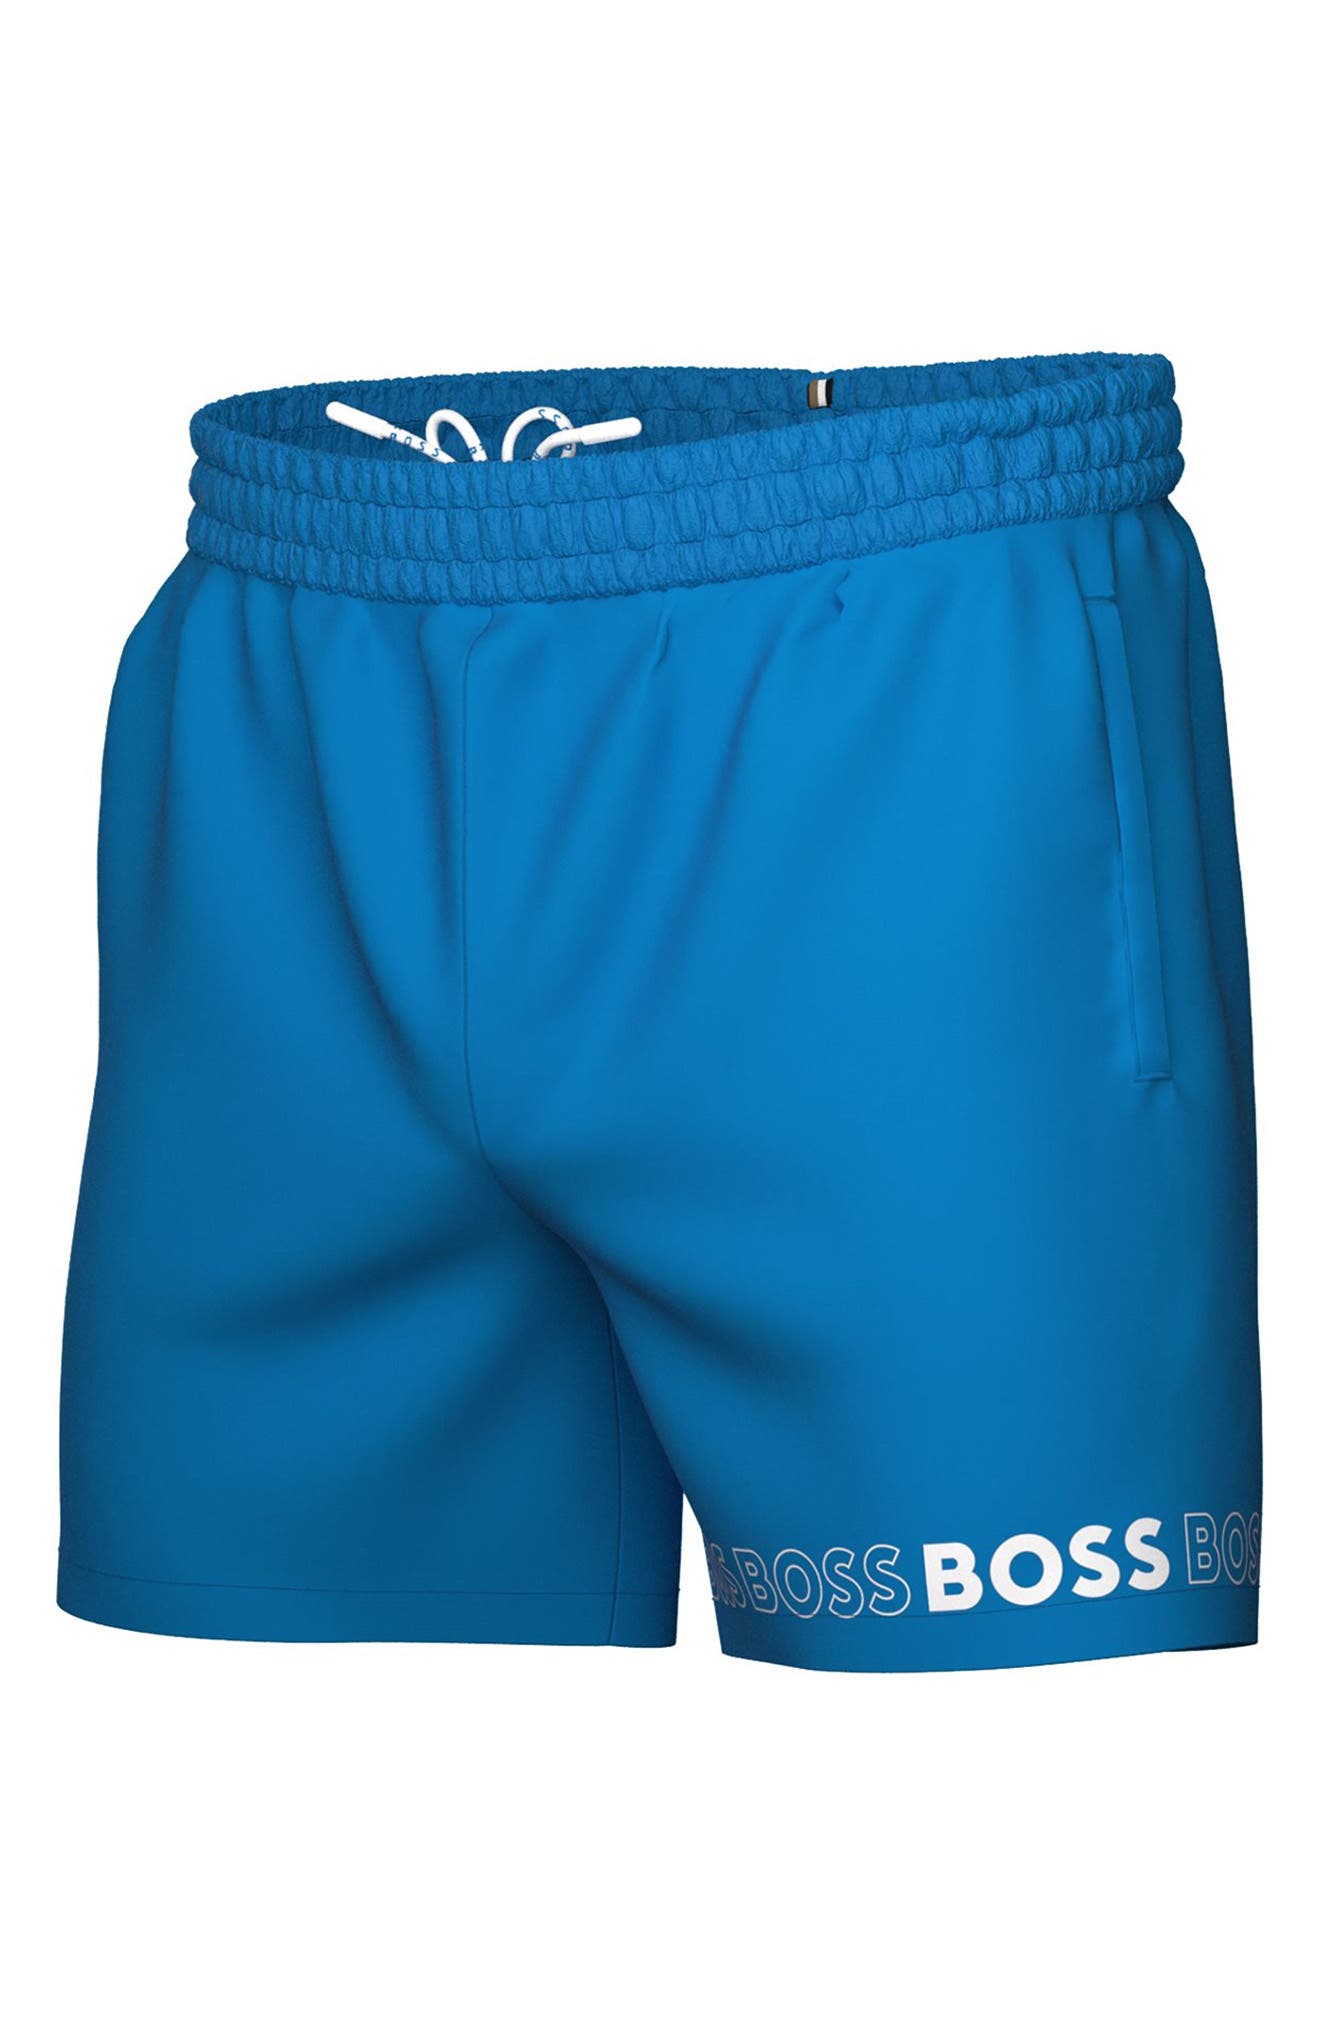 BOSS Dolphin Logo Swim Trunks in Bright Blue